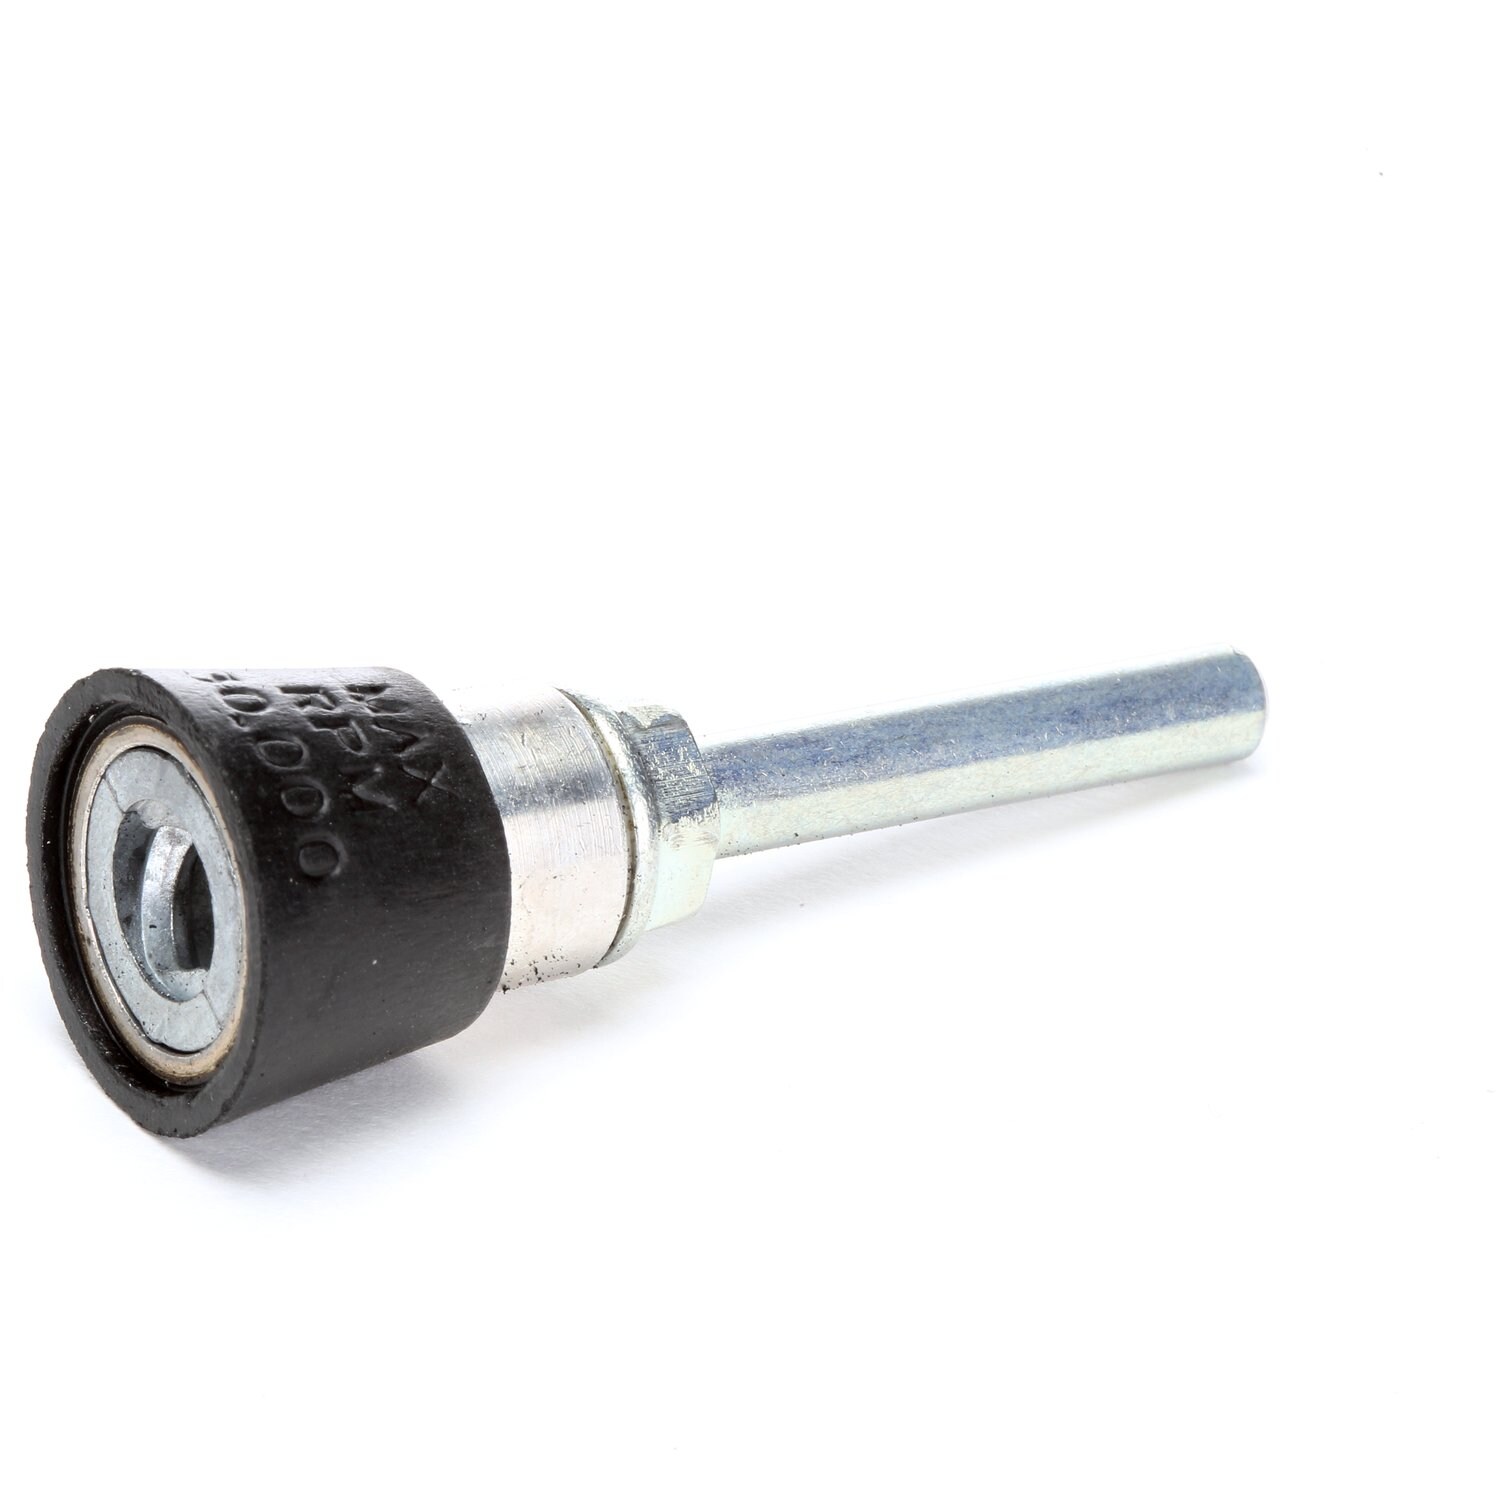 7010310284 - Standard Abrasives Resin Fiber Medium Holder Pad 543630, 4-1/2 in, 5
ea/Case